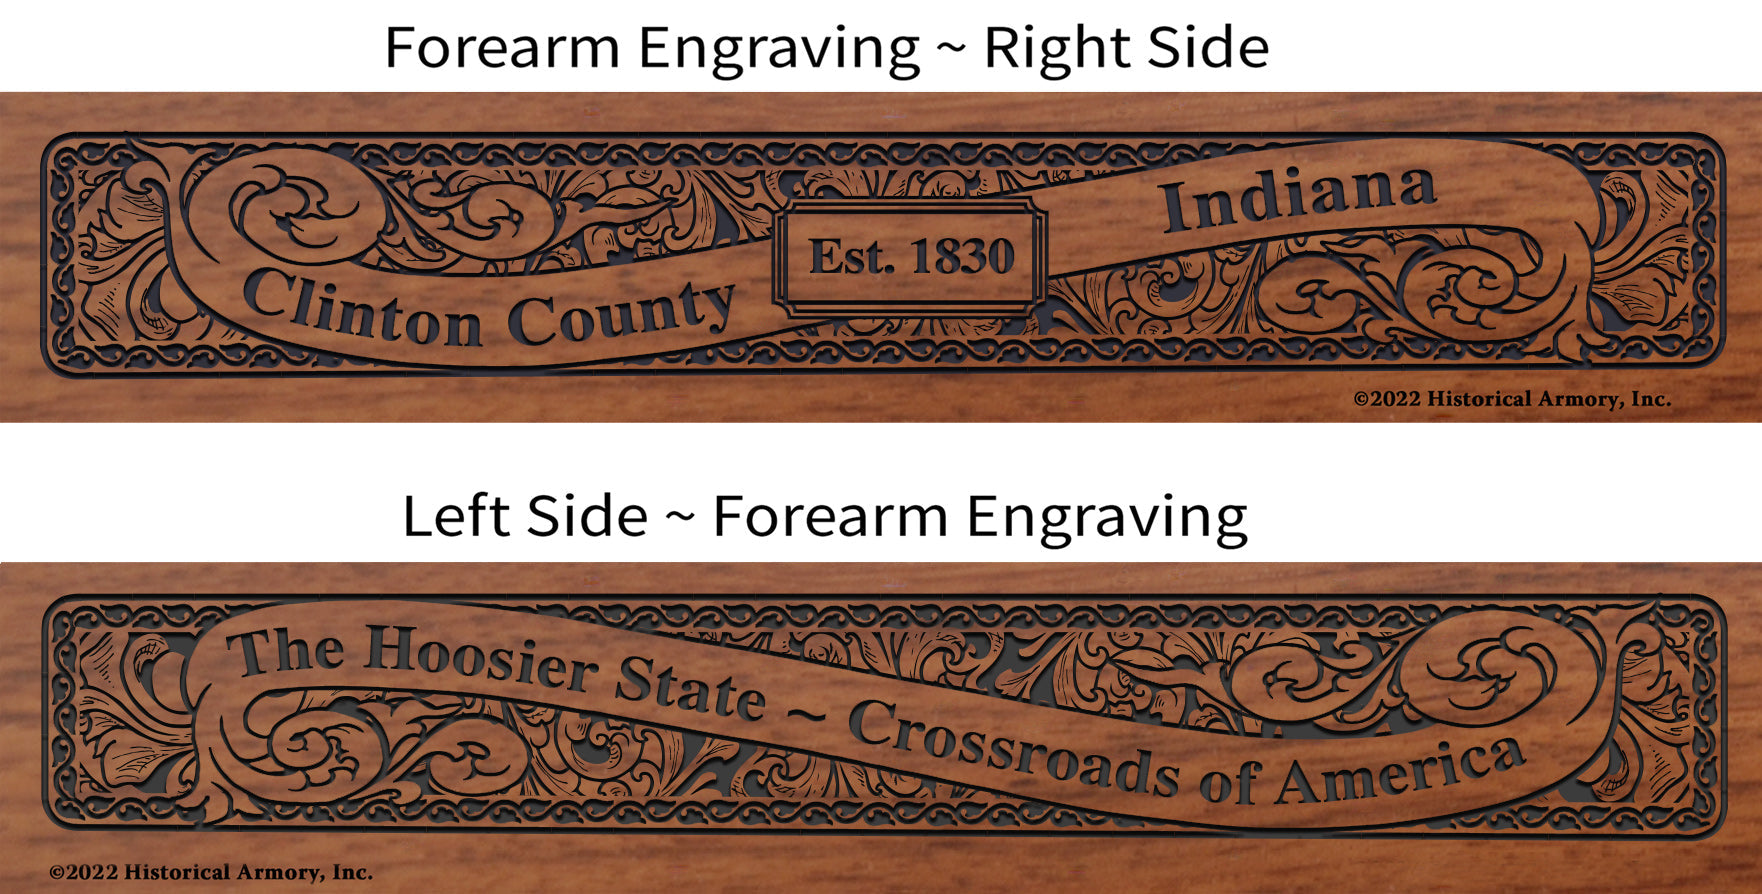 Clinton County Indiana Engraved Rifle Forearm